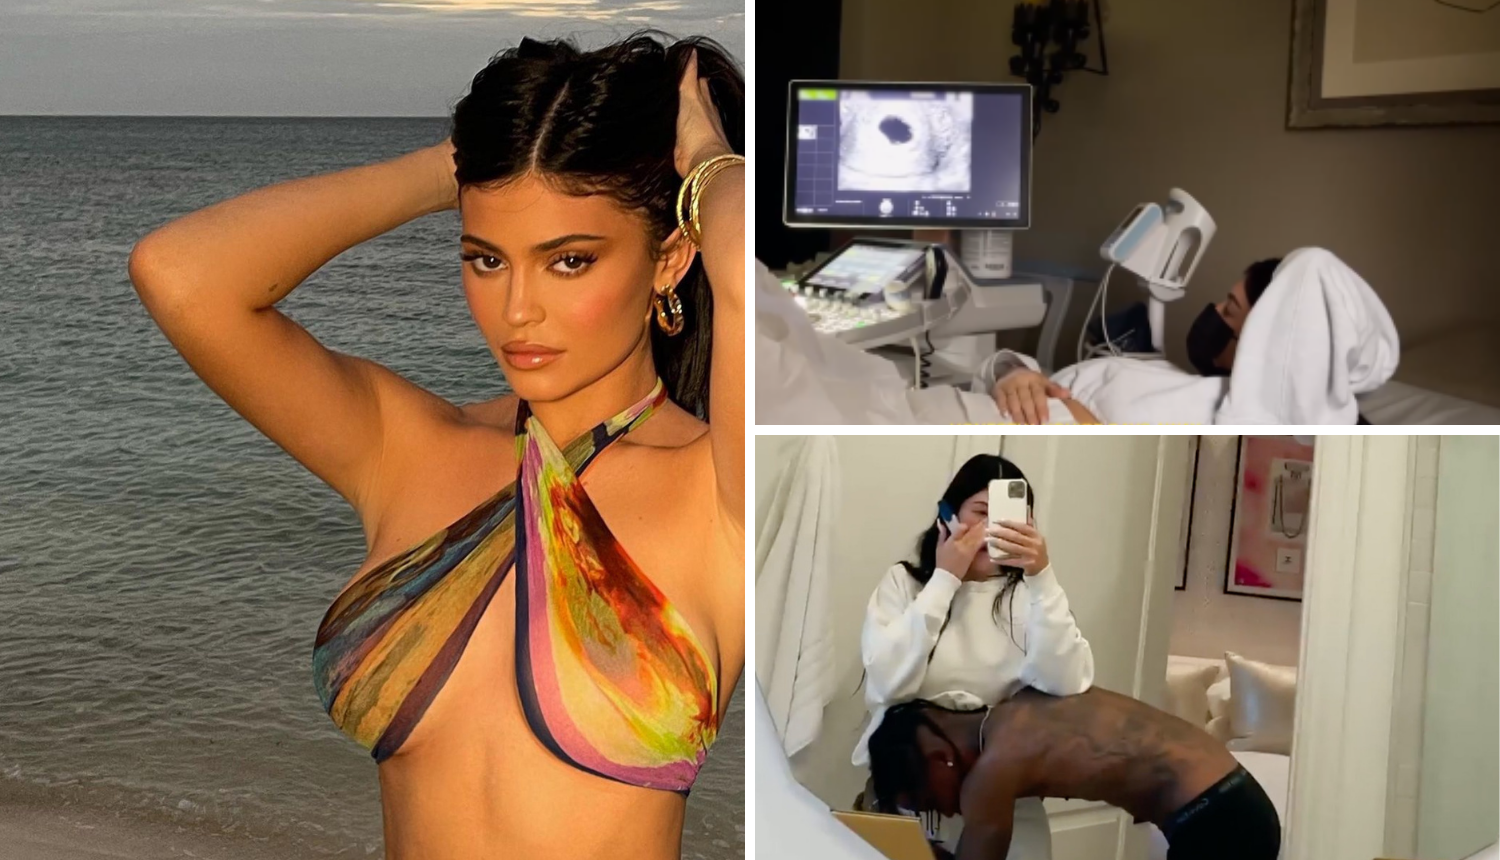 Kylie Jenner objavila snimku s ultrazvuka: Stiže druga beba